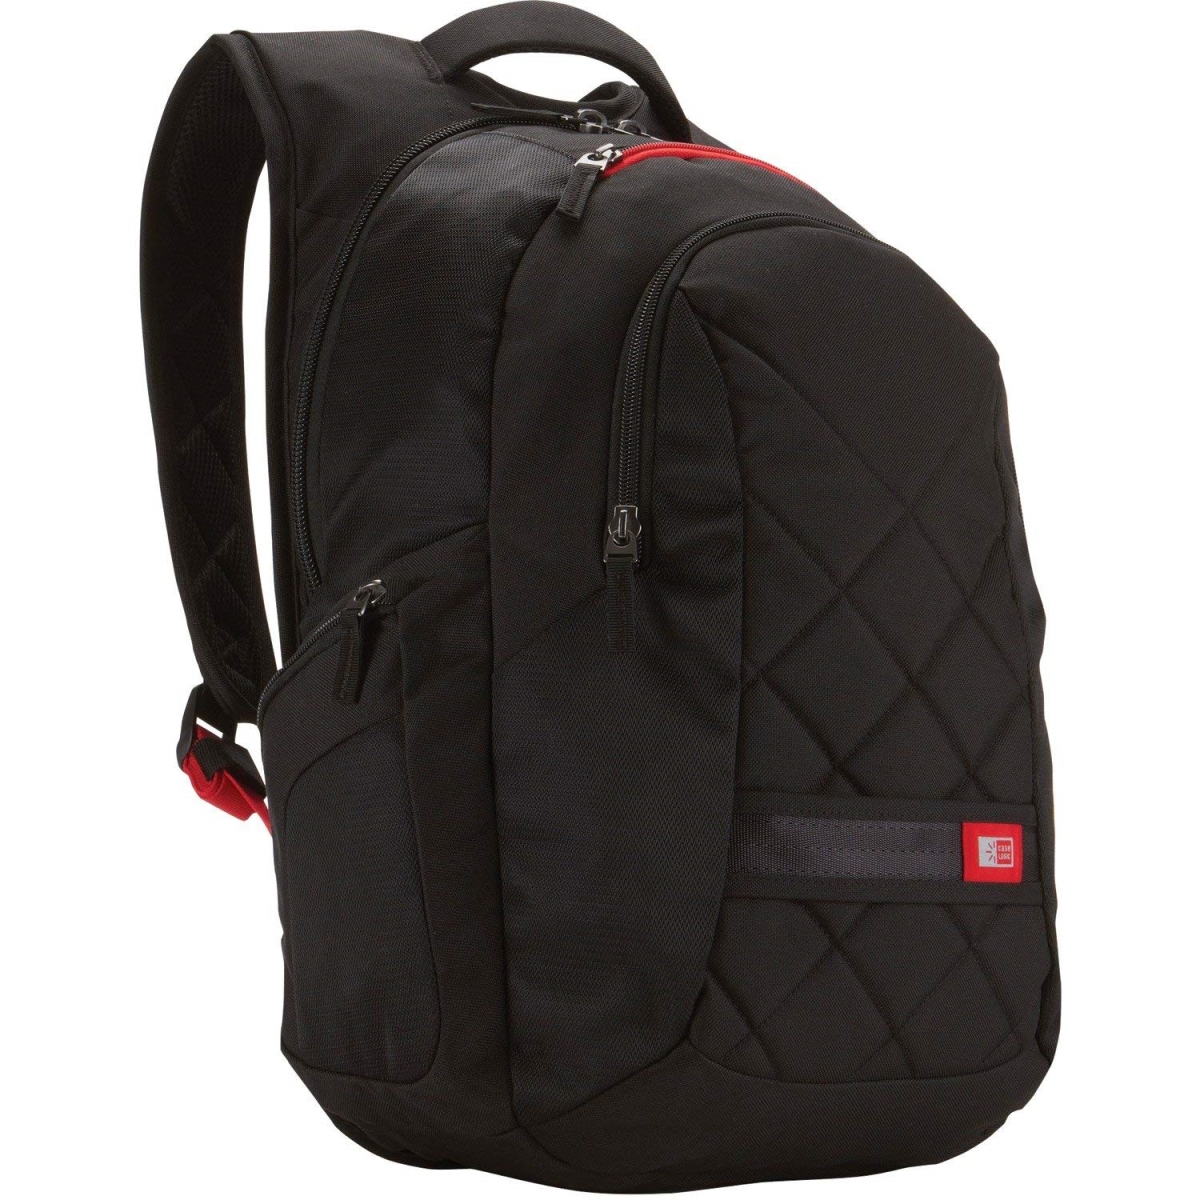 Caselogic 3201268 16 In. Laptop Backpack, Black - 9.5 X 14 X 16.75 In.